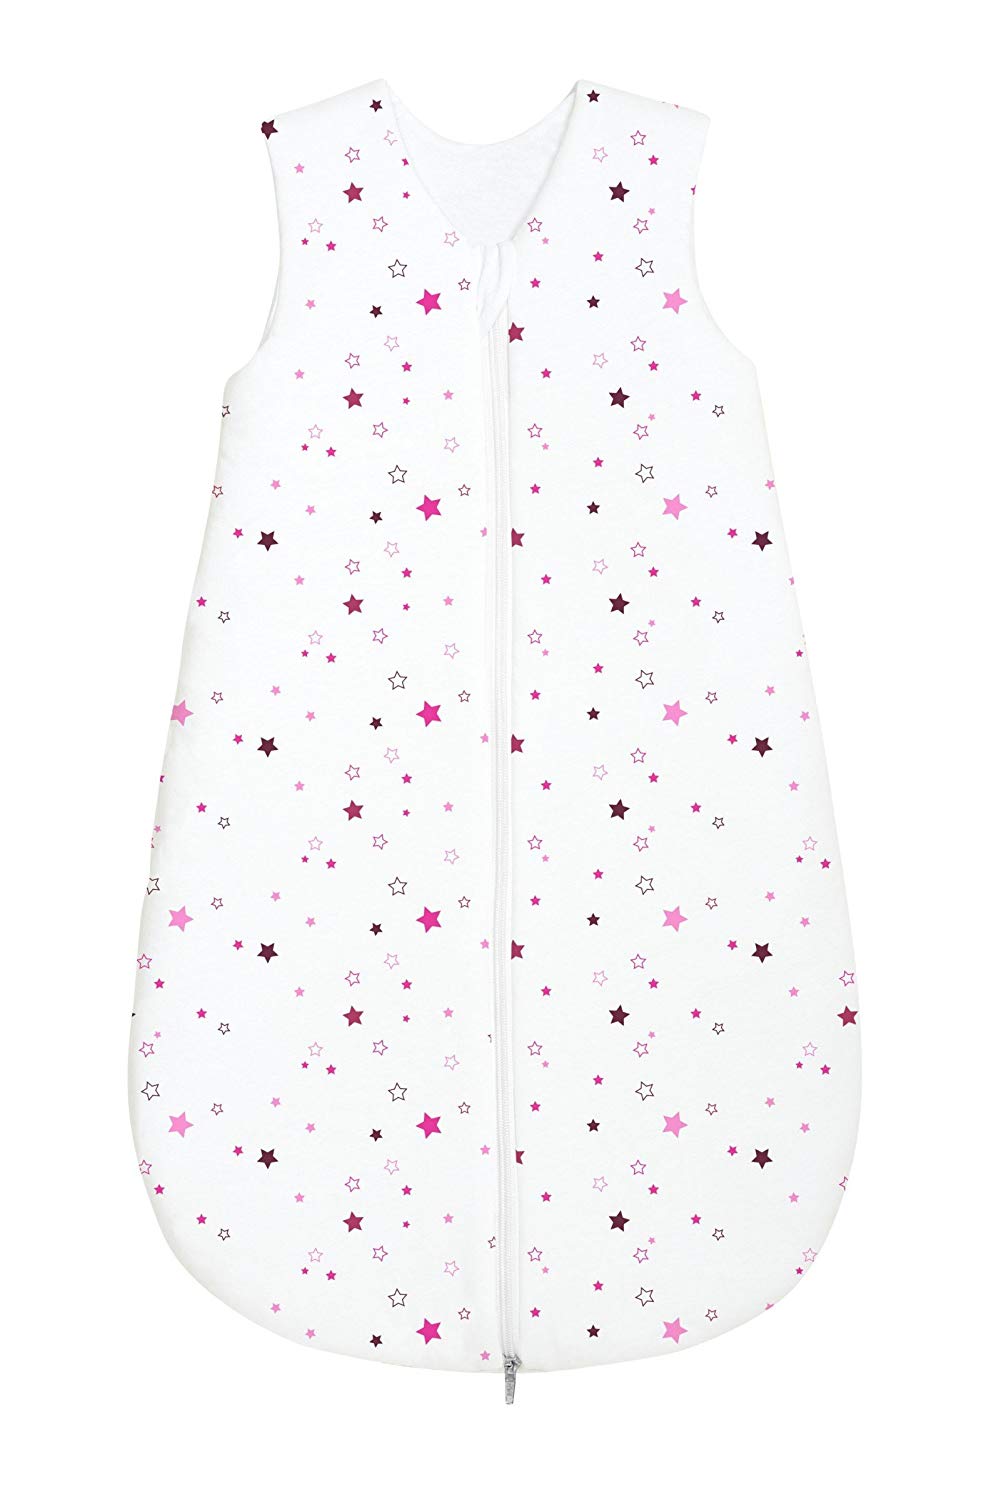 Odenwälder Jersey Summer Sleeping Bag Stars Pink and Blackberry, 90 cm